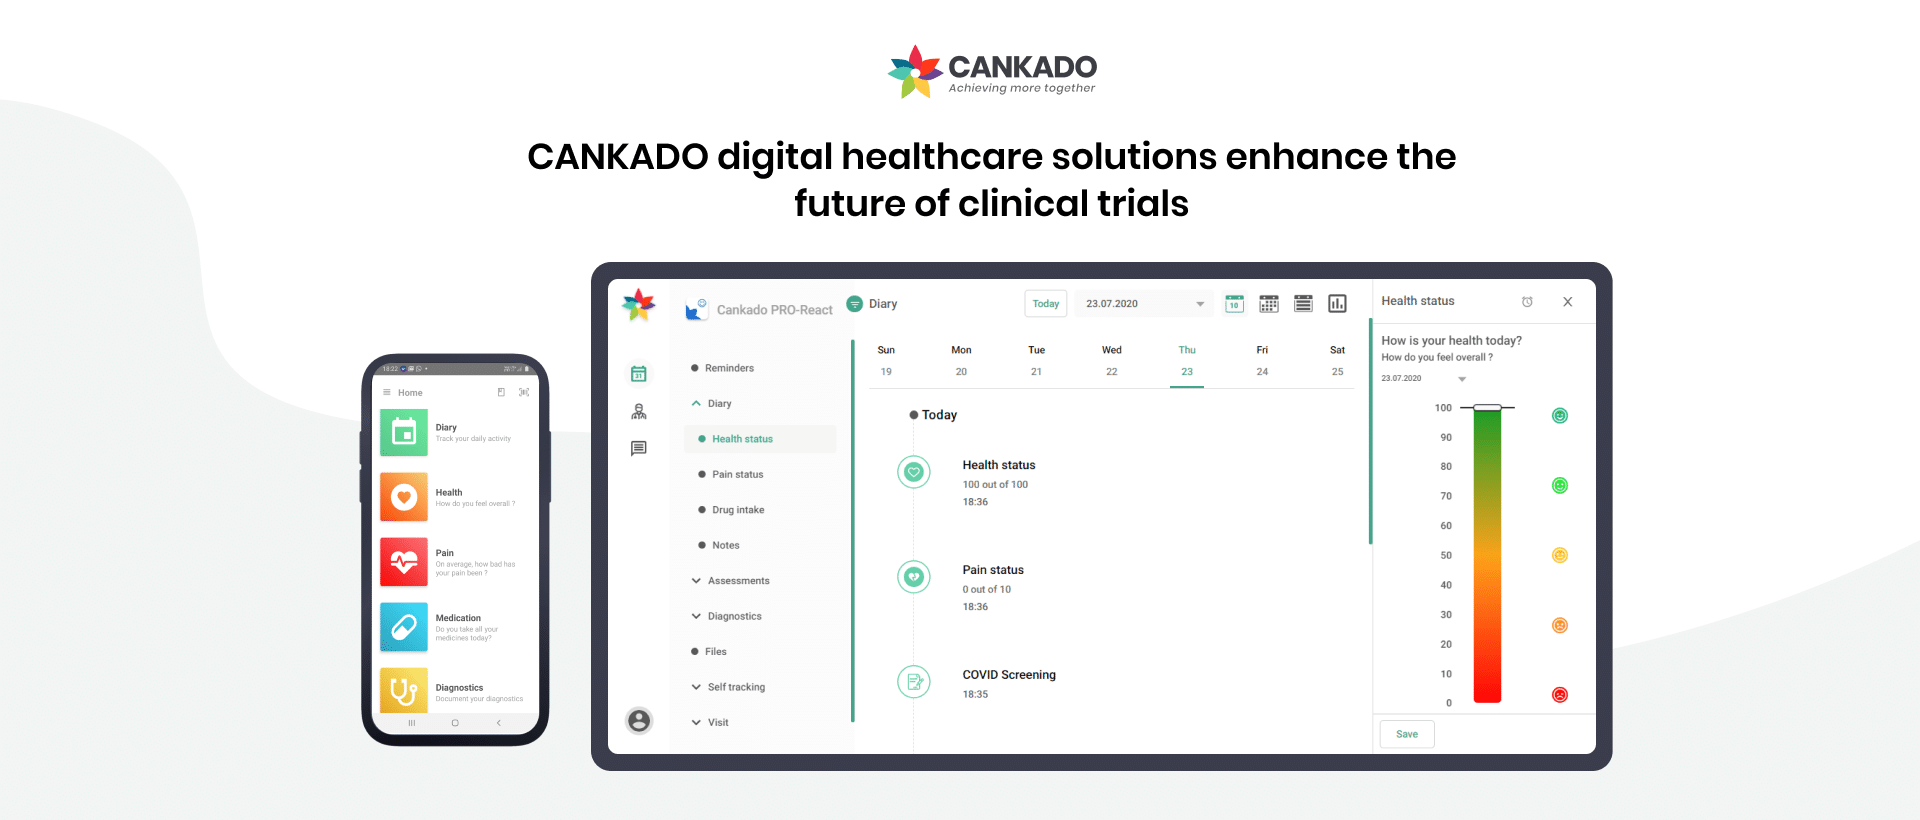 CANKADO digital healthcare solutions enhance the future of clinical trials